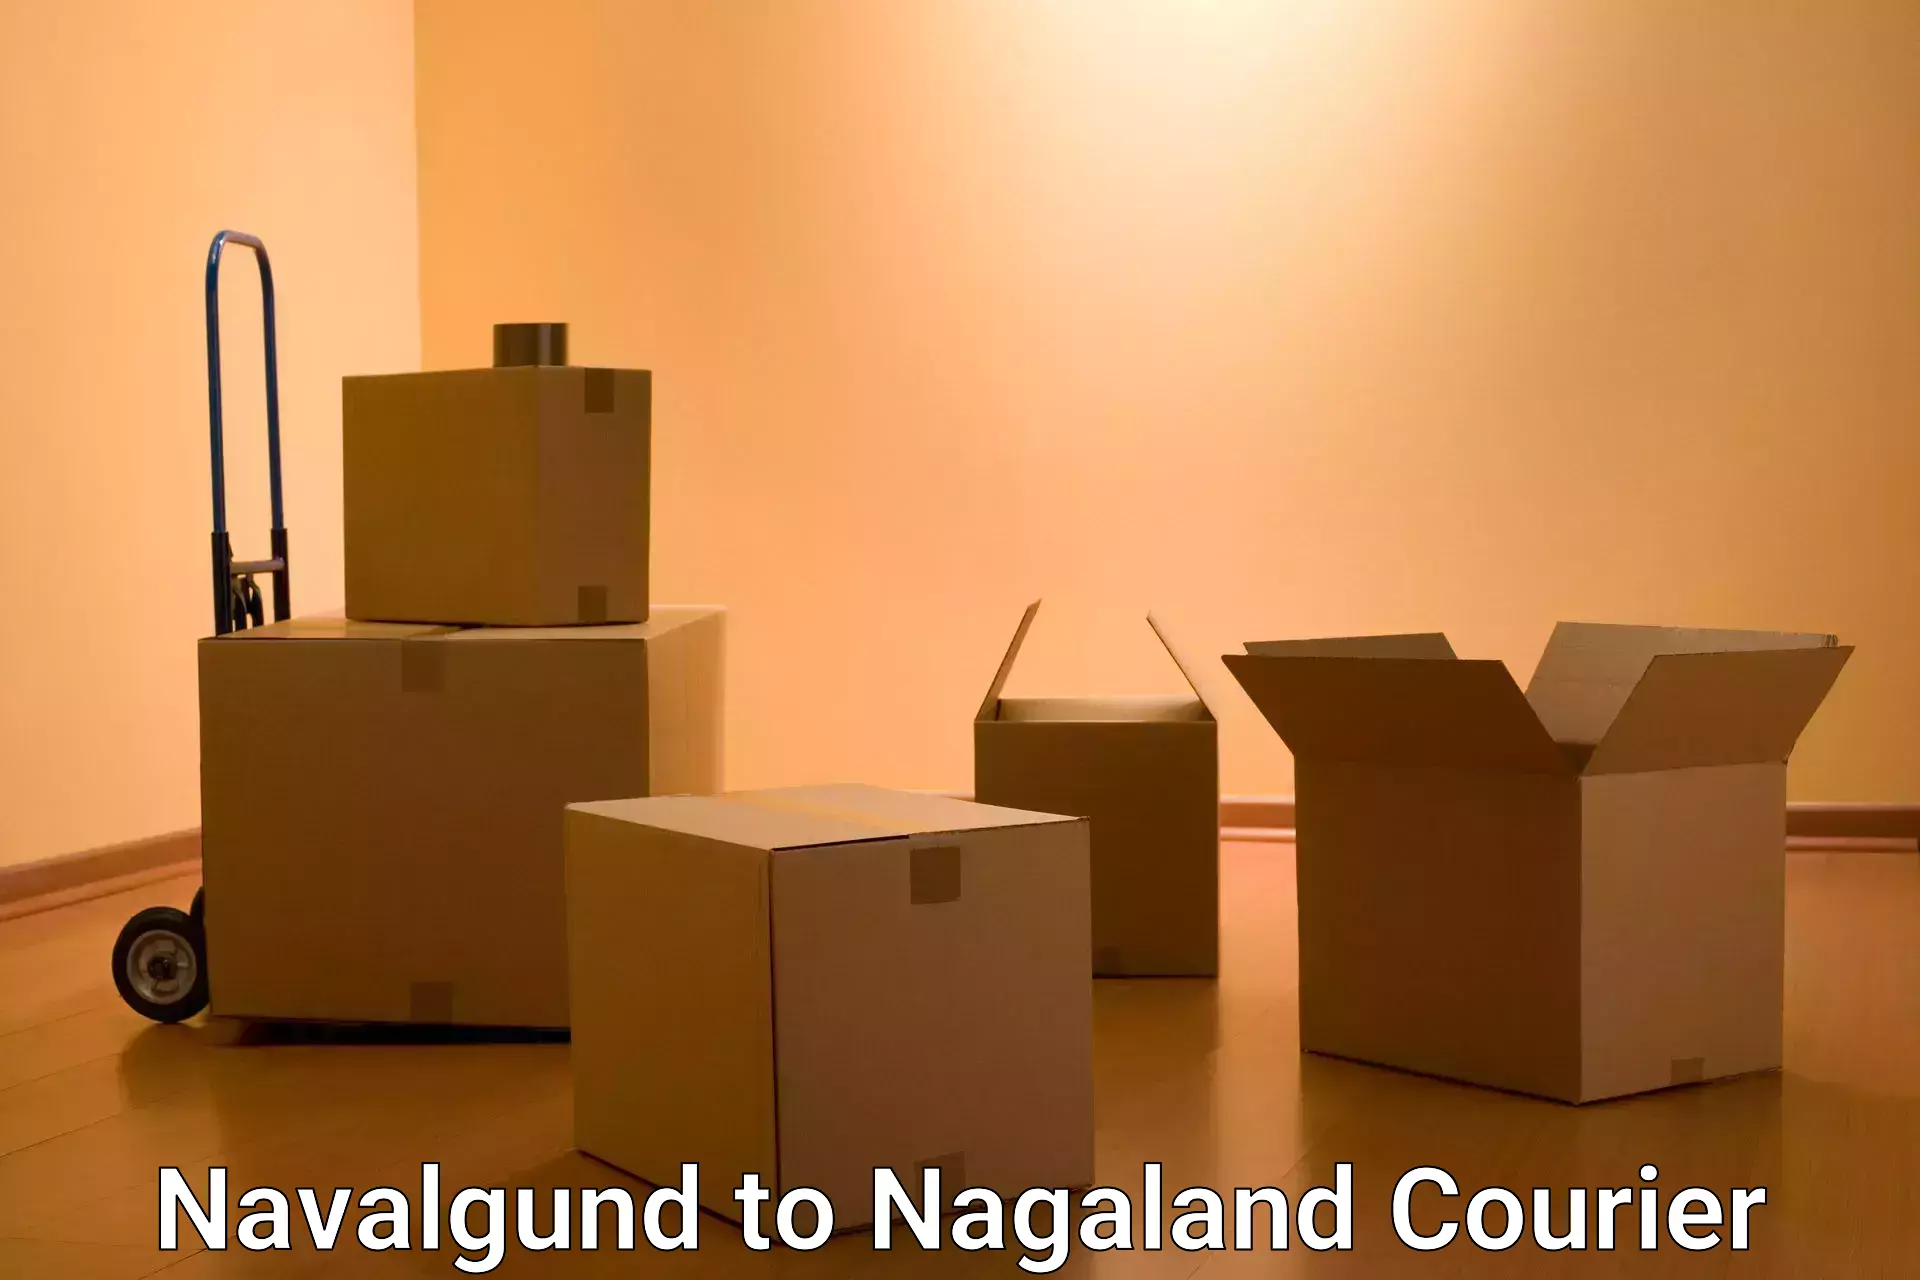 Cash on delivery service Navalgund to Nagaland